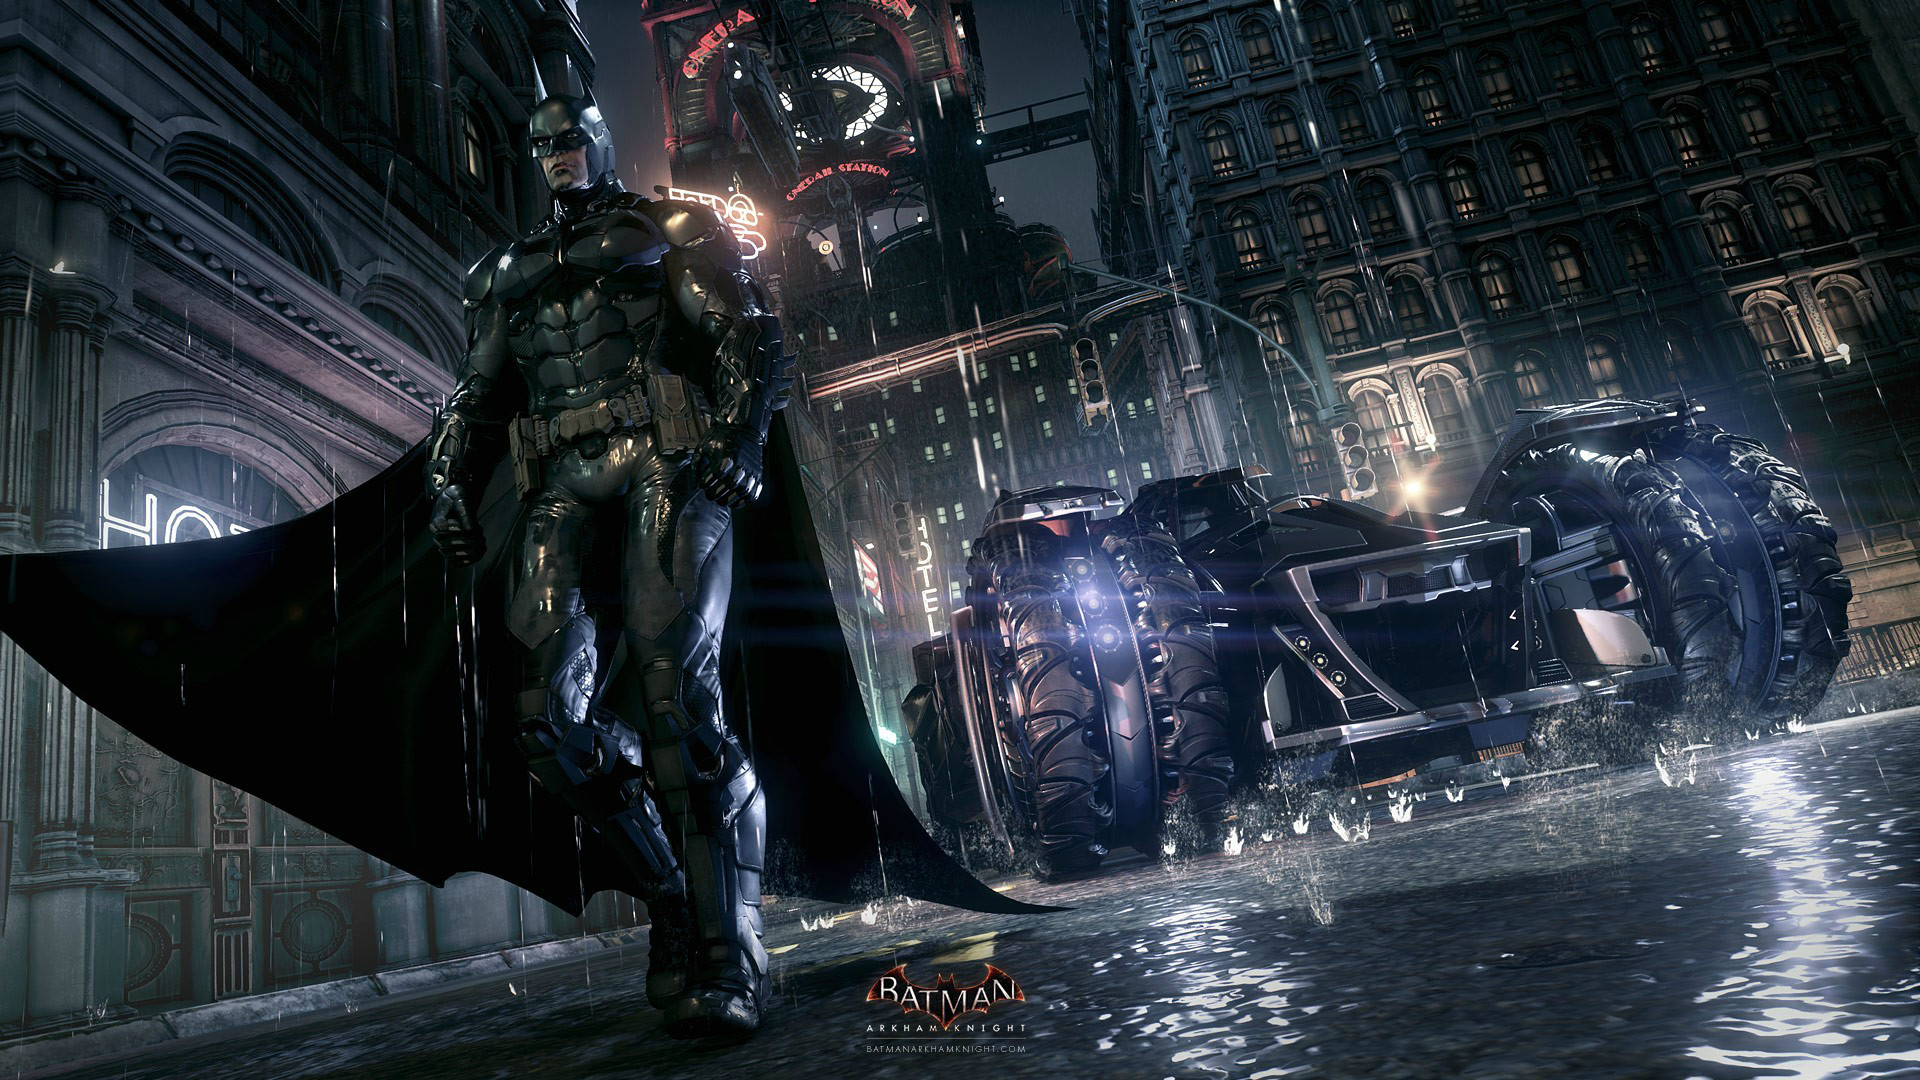 EL BLOJ: Batman: Arkham Knight